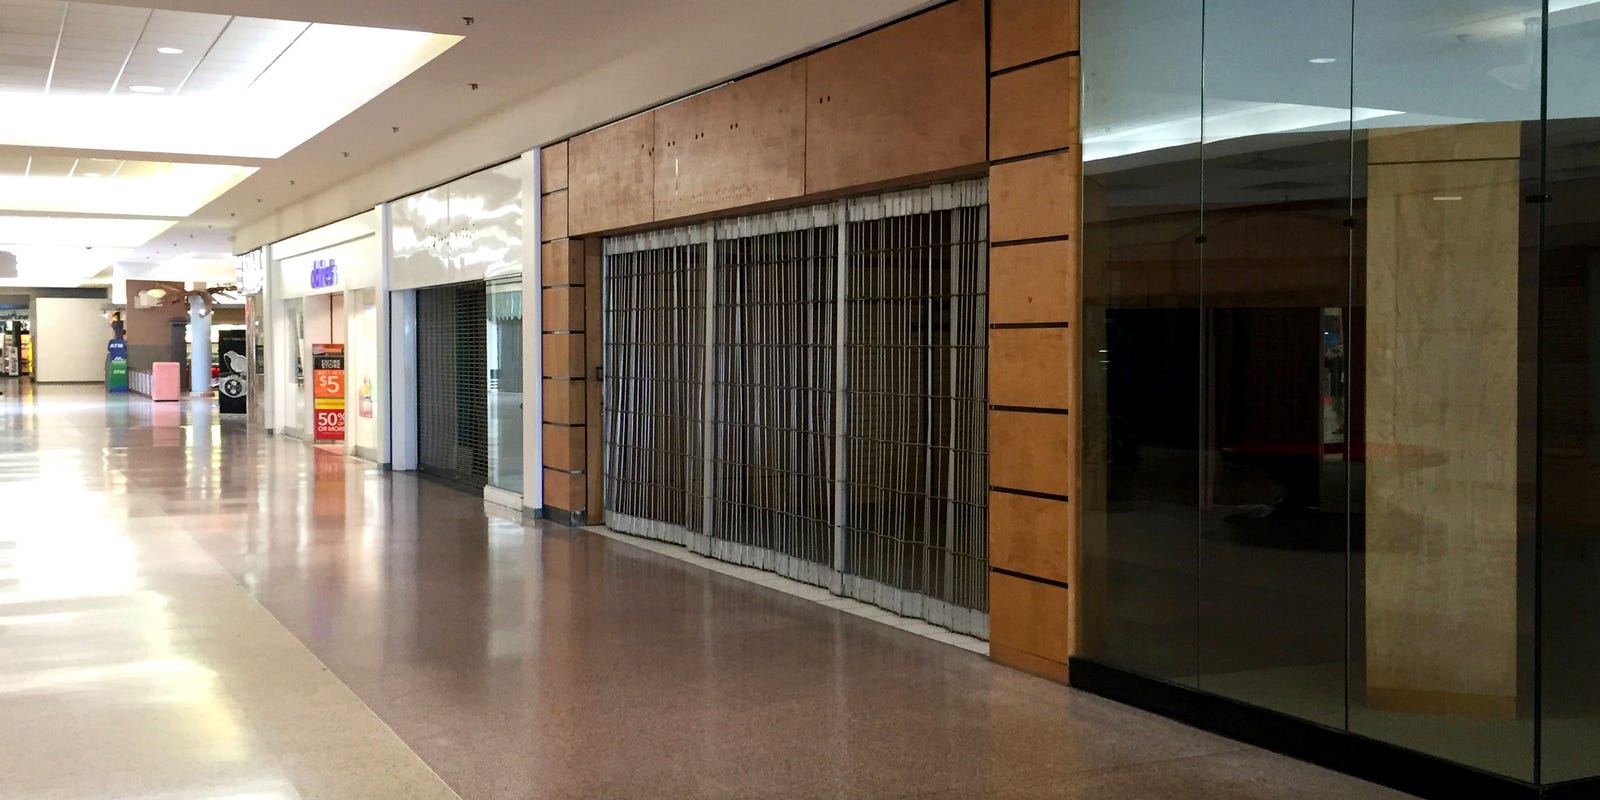 Eastland Center mall struggles as more stores close